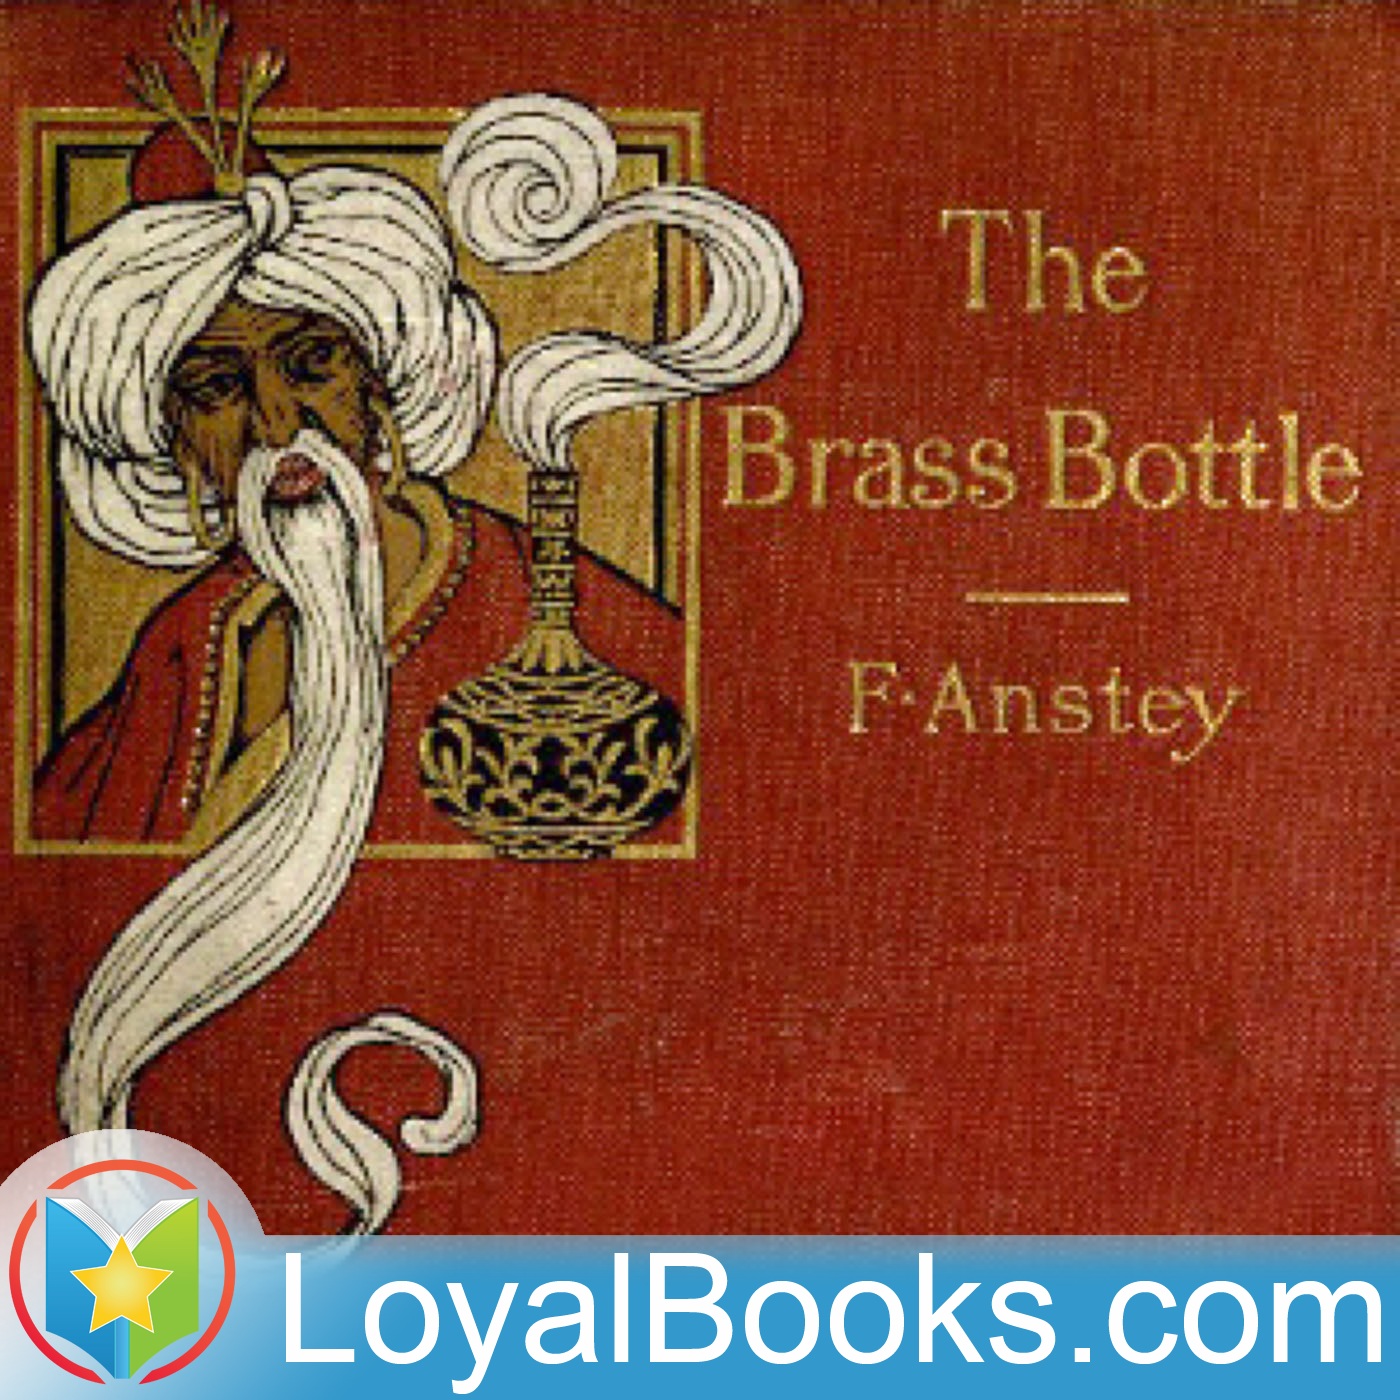 The Brass Bottle by F. Anstey